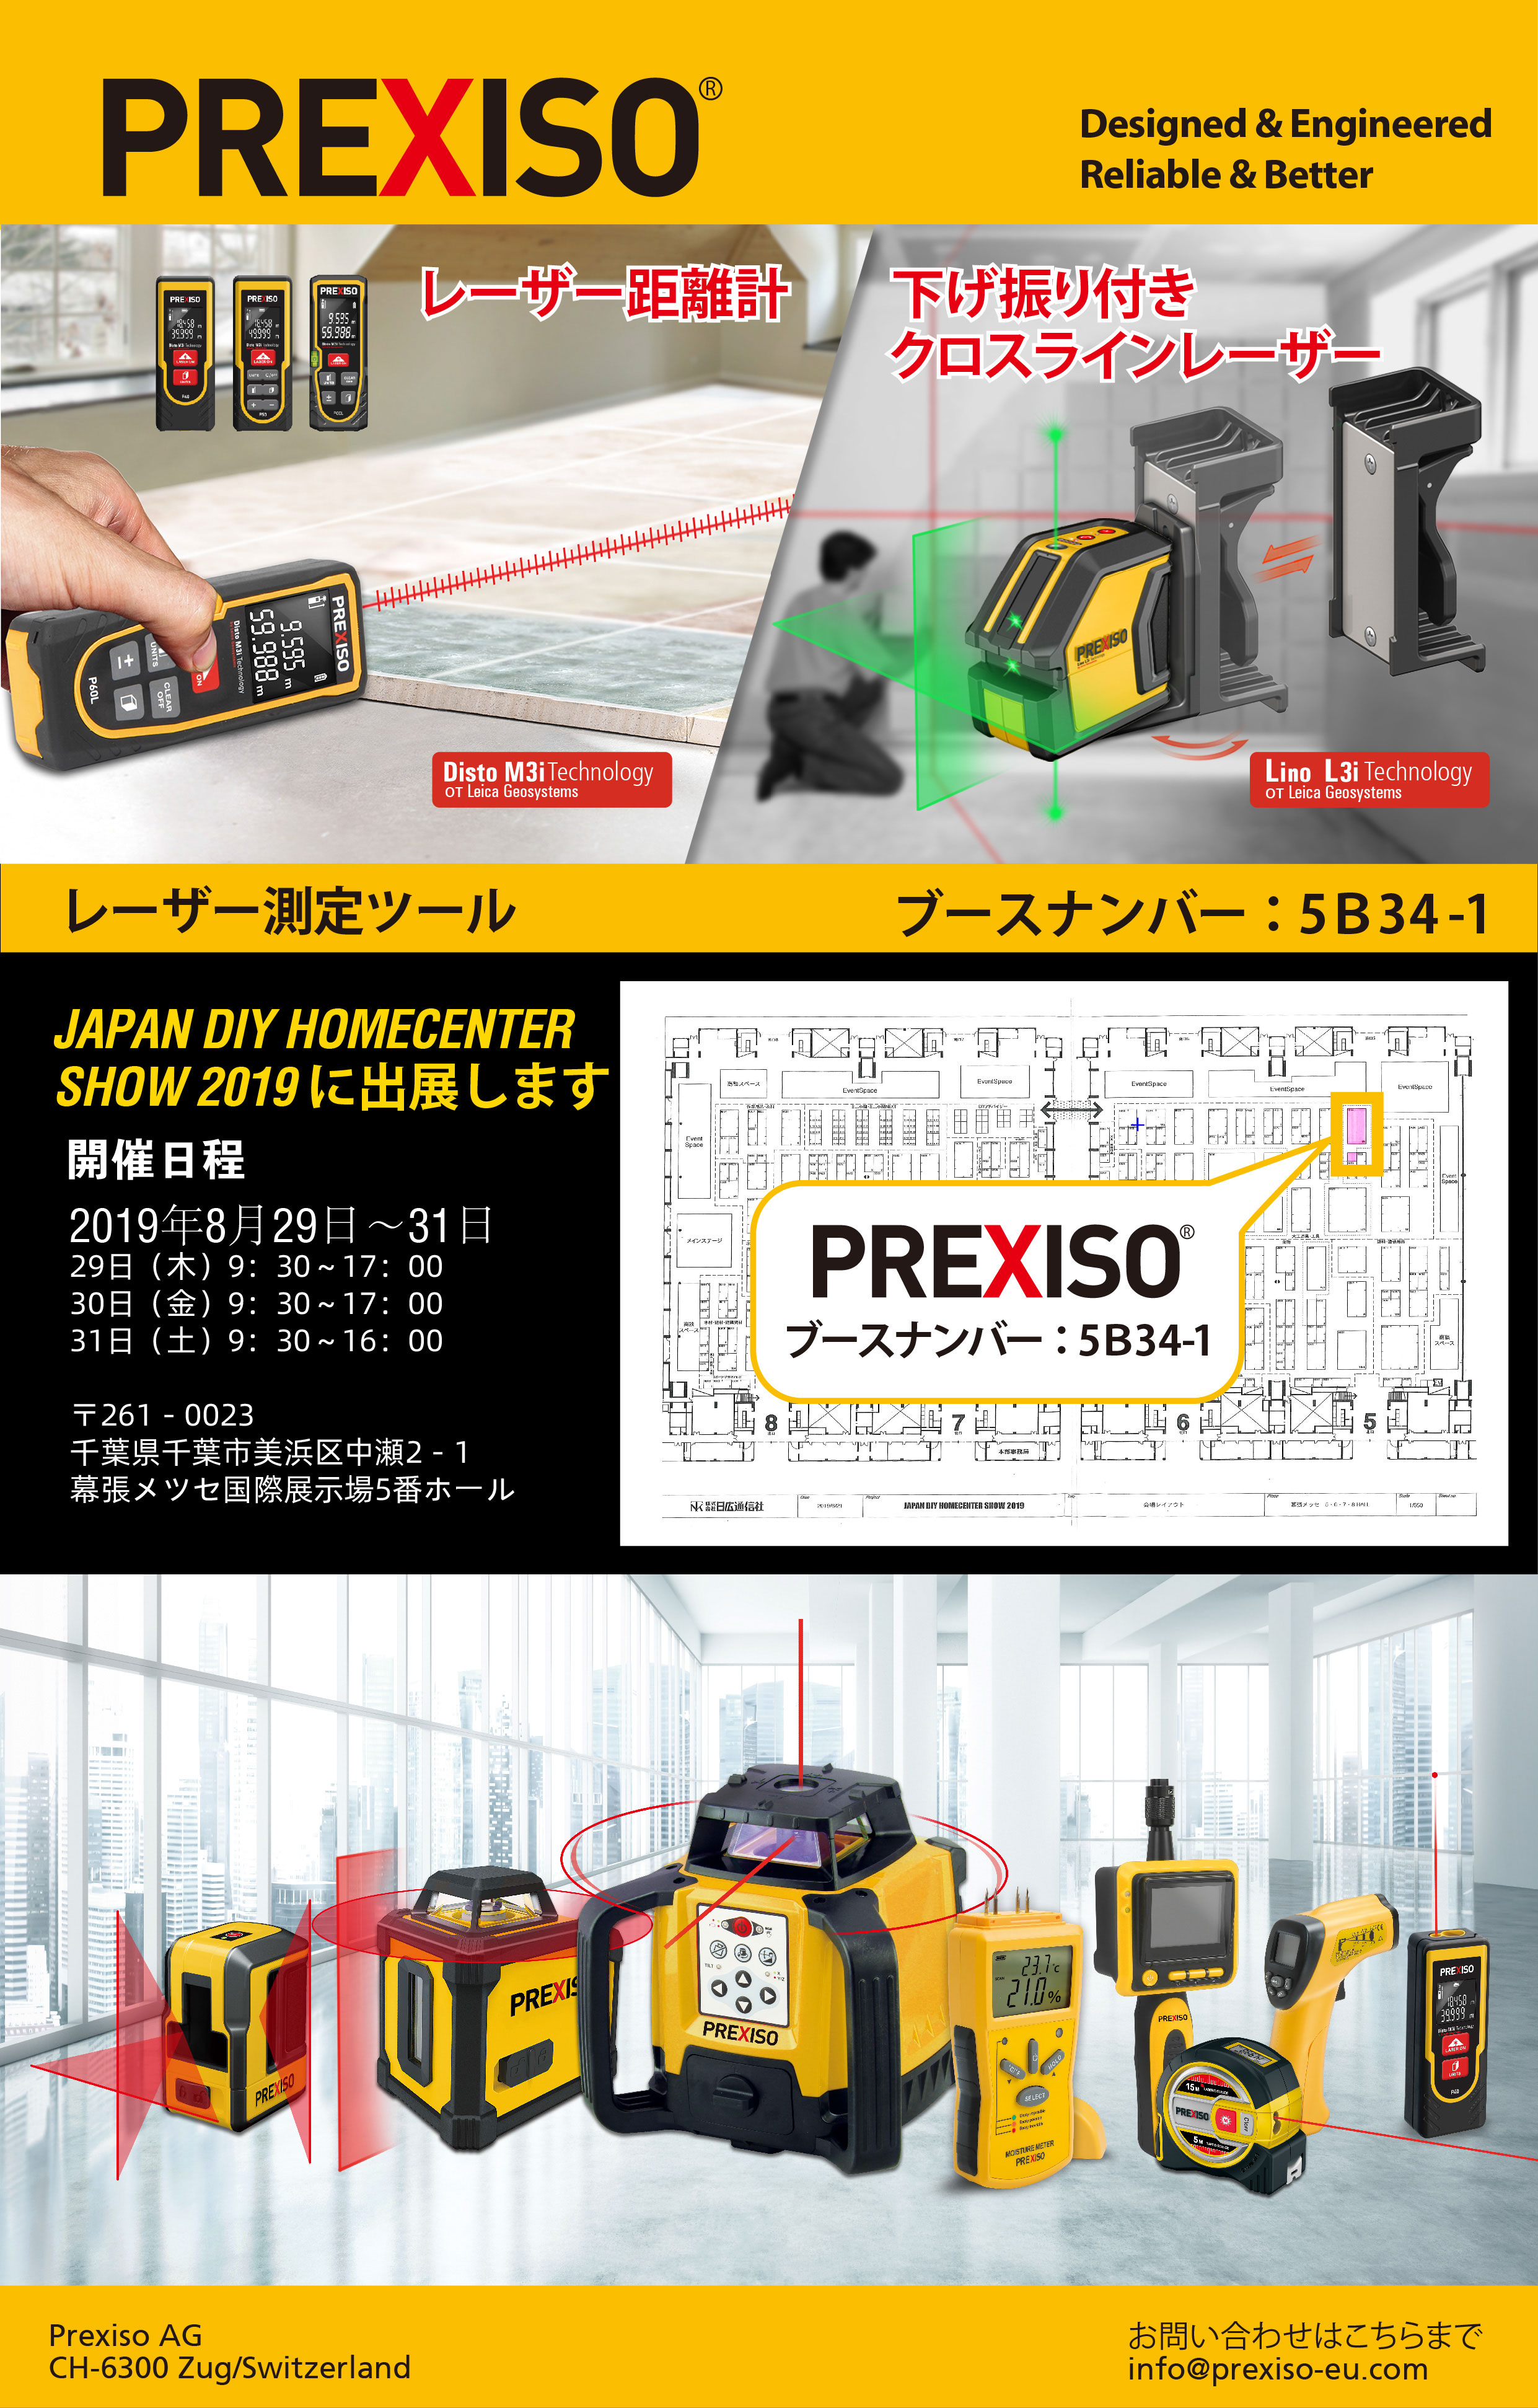 C-_Users_wym01_wx_Desktop_PREXISO-Invitation-to-Japan-DIY-Homecenter-Show-2019.jpg